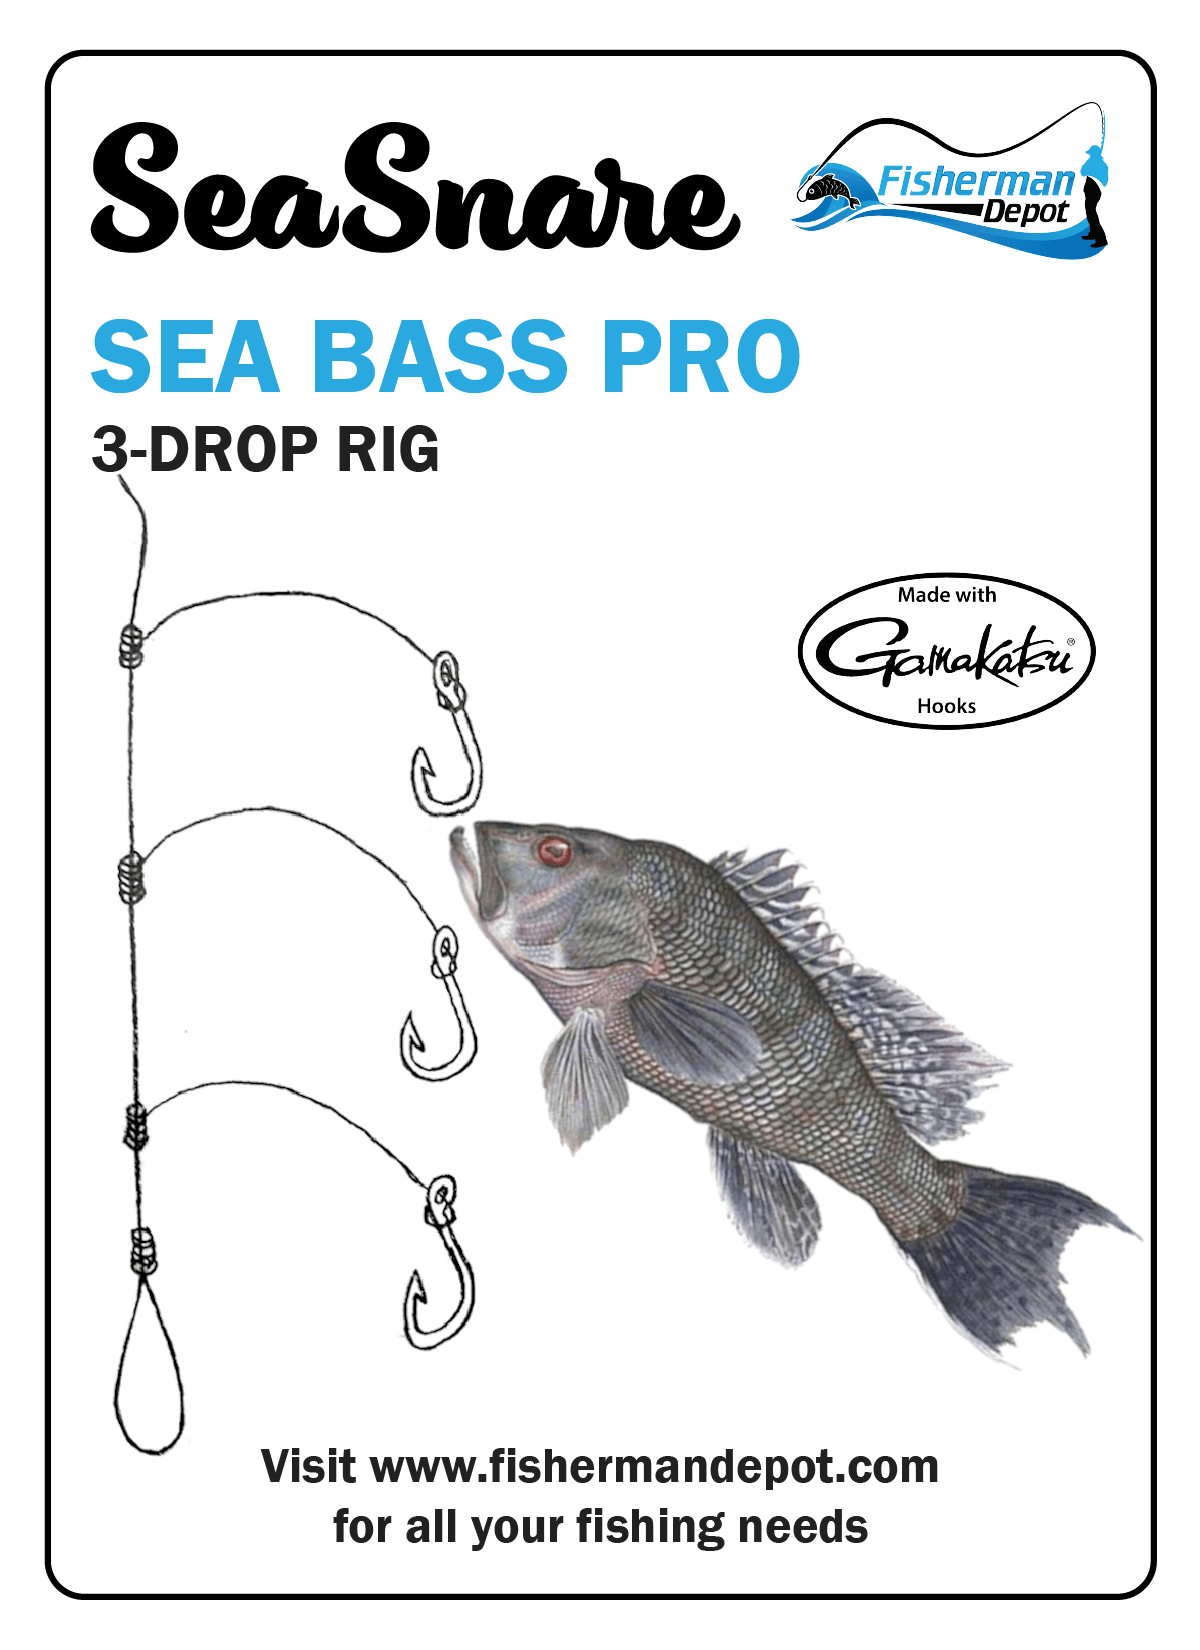 SeaSnare Sea Bass Pro - 3-Drop Rig G